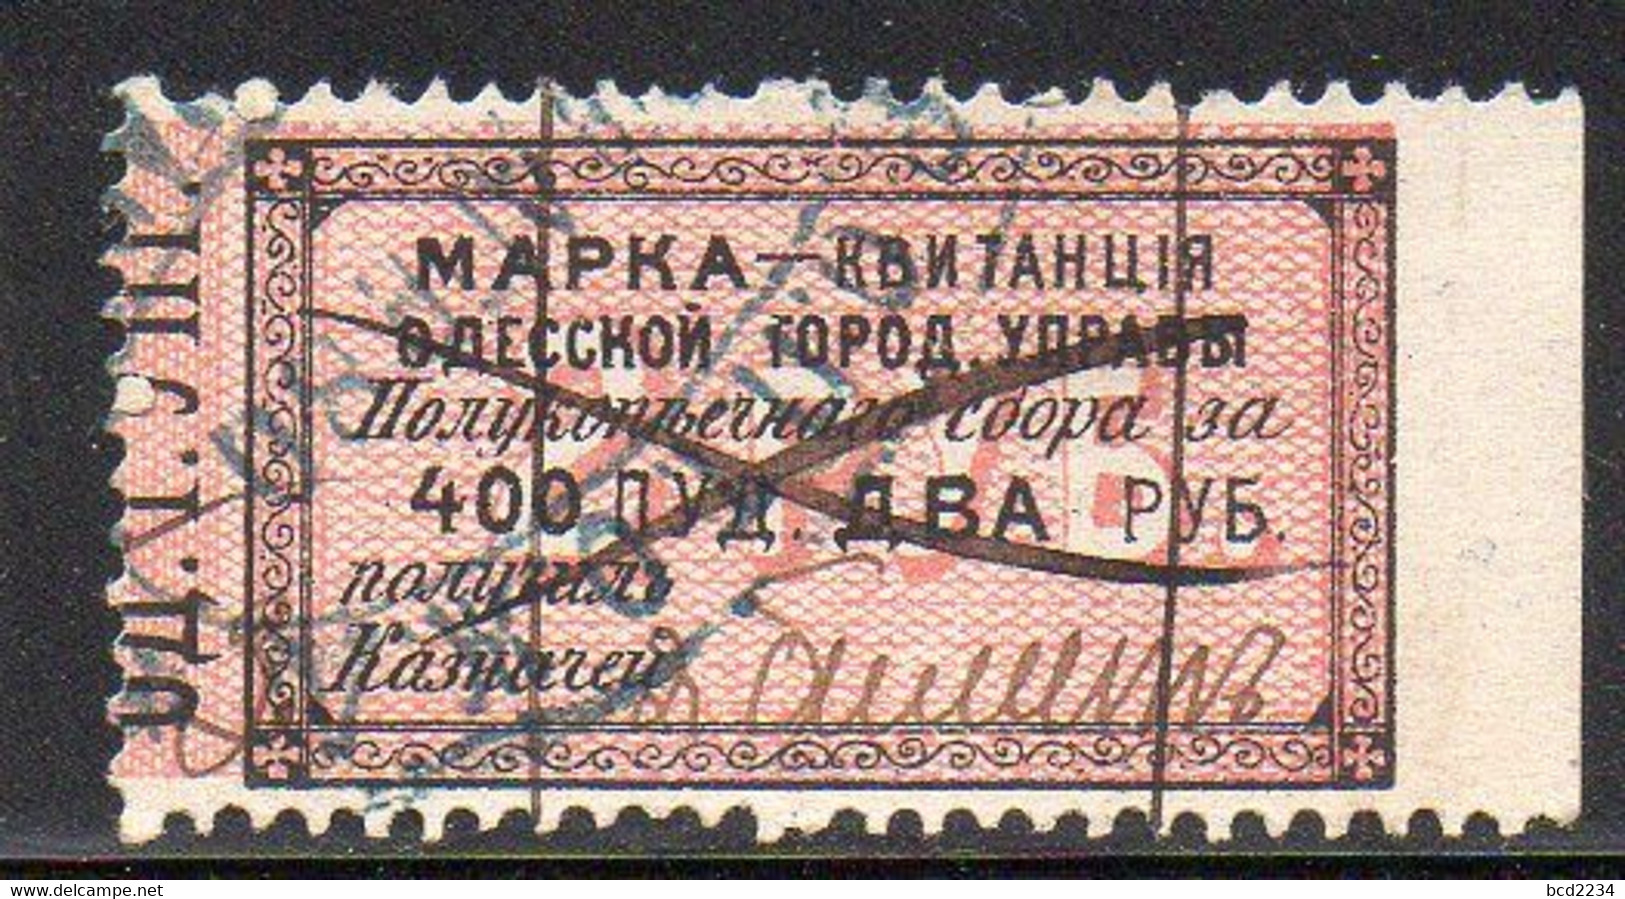 RUSSIA UKRAINE ODESSA MUNICIPAL REVENUE 1879 2R (400) BLACK & PINK BAREFOOT #23 BORDER WITH SCROLLS MARGIN RIGHT FISCAUX - Fiscaux